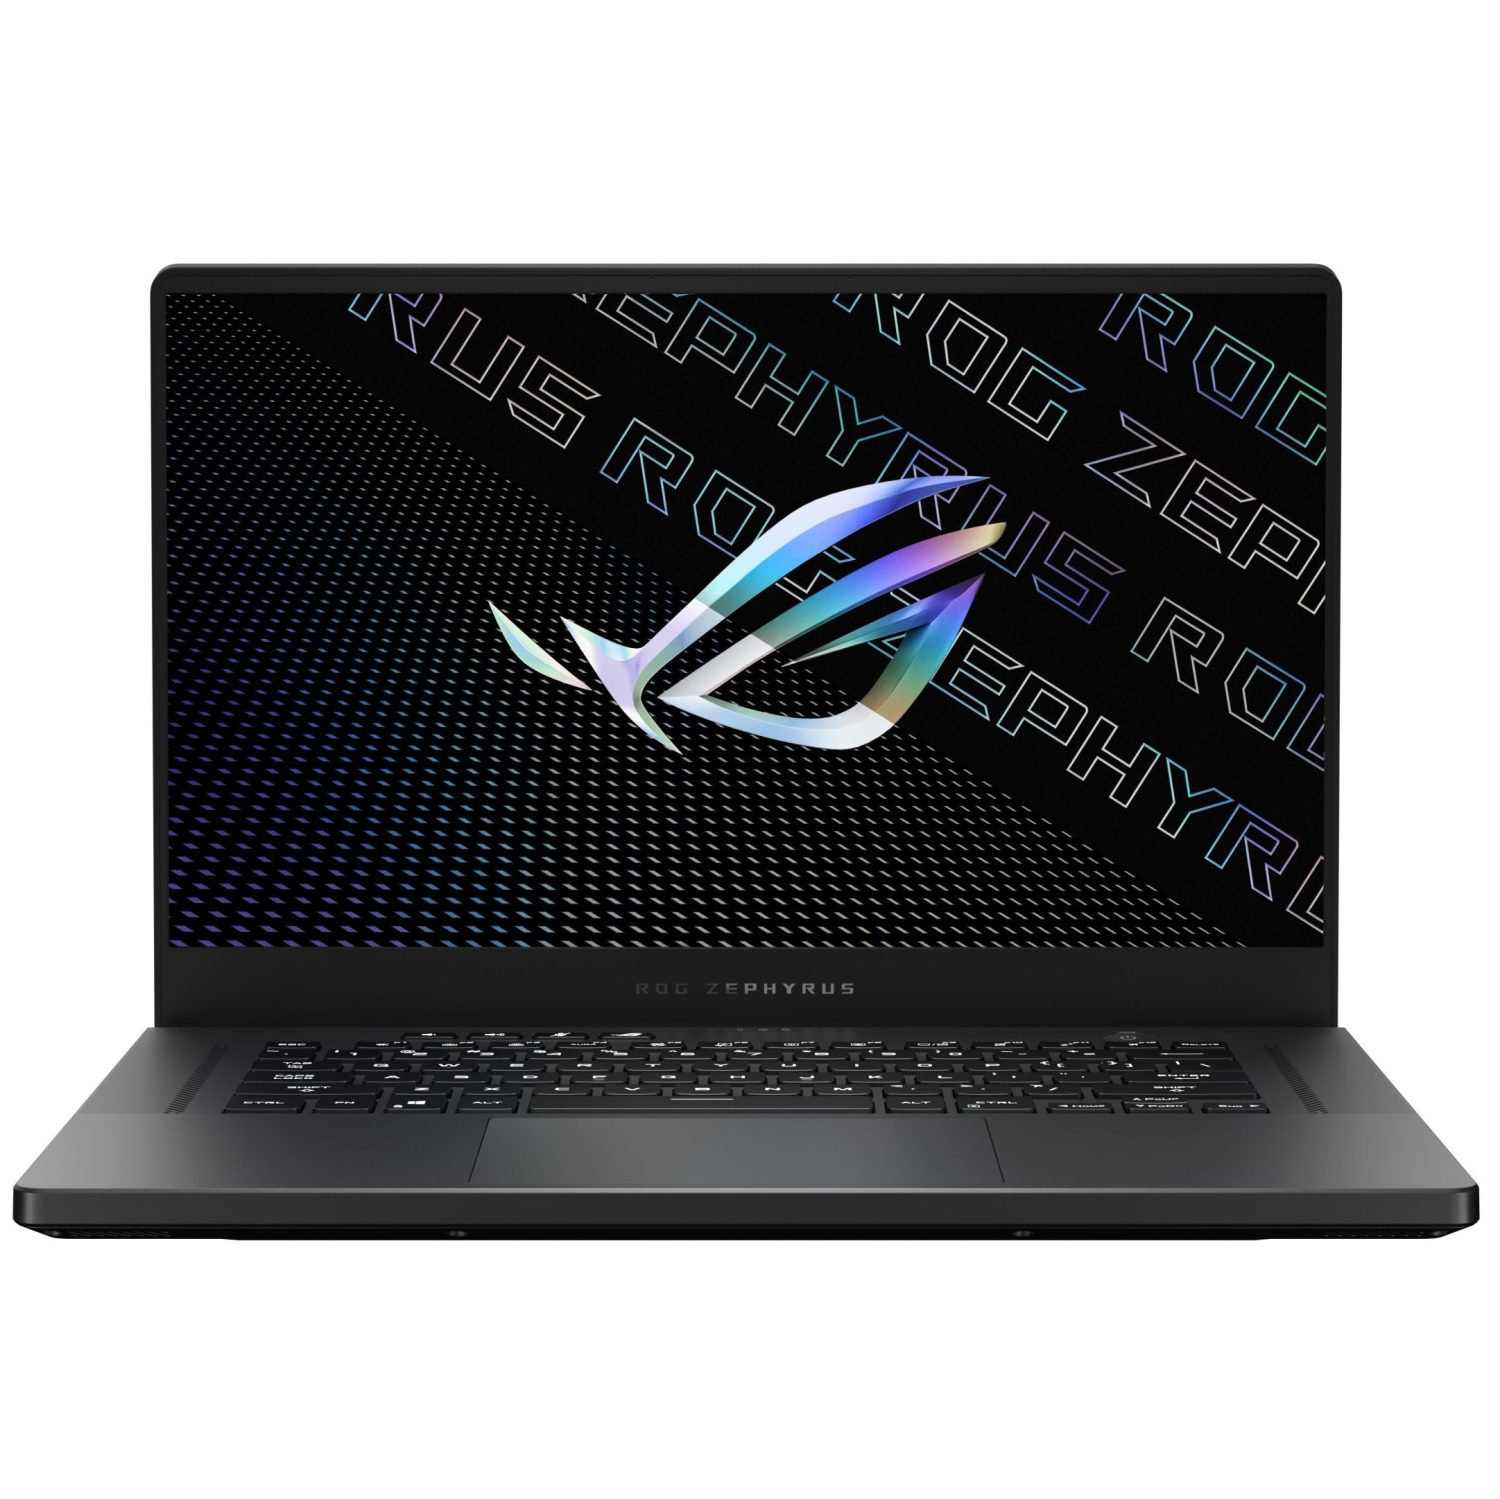 Custom ASUS ROG Zephyrus G15 Laptop (AMD Ryzen 9 5900HS, 40GB RAM, 2TB m.2 SATA SSD, NVIDIA RTX 3070, Win 10 Home)